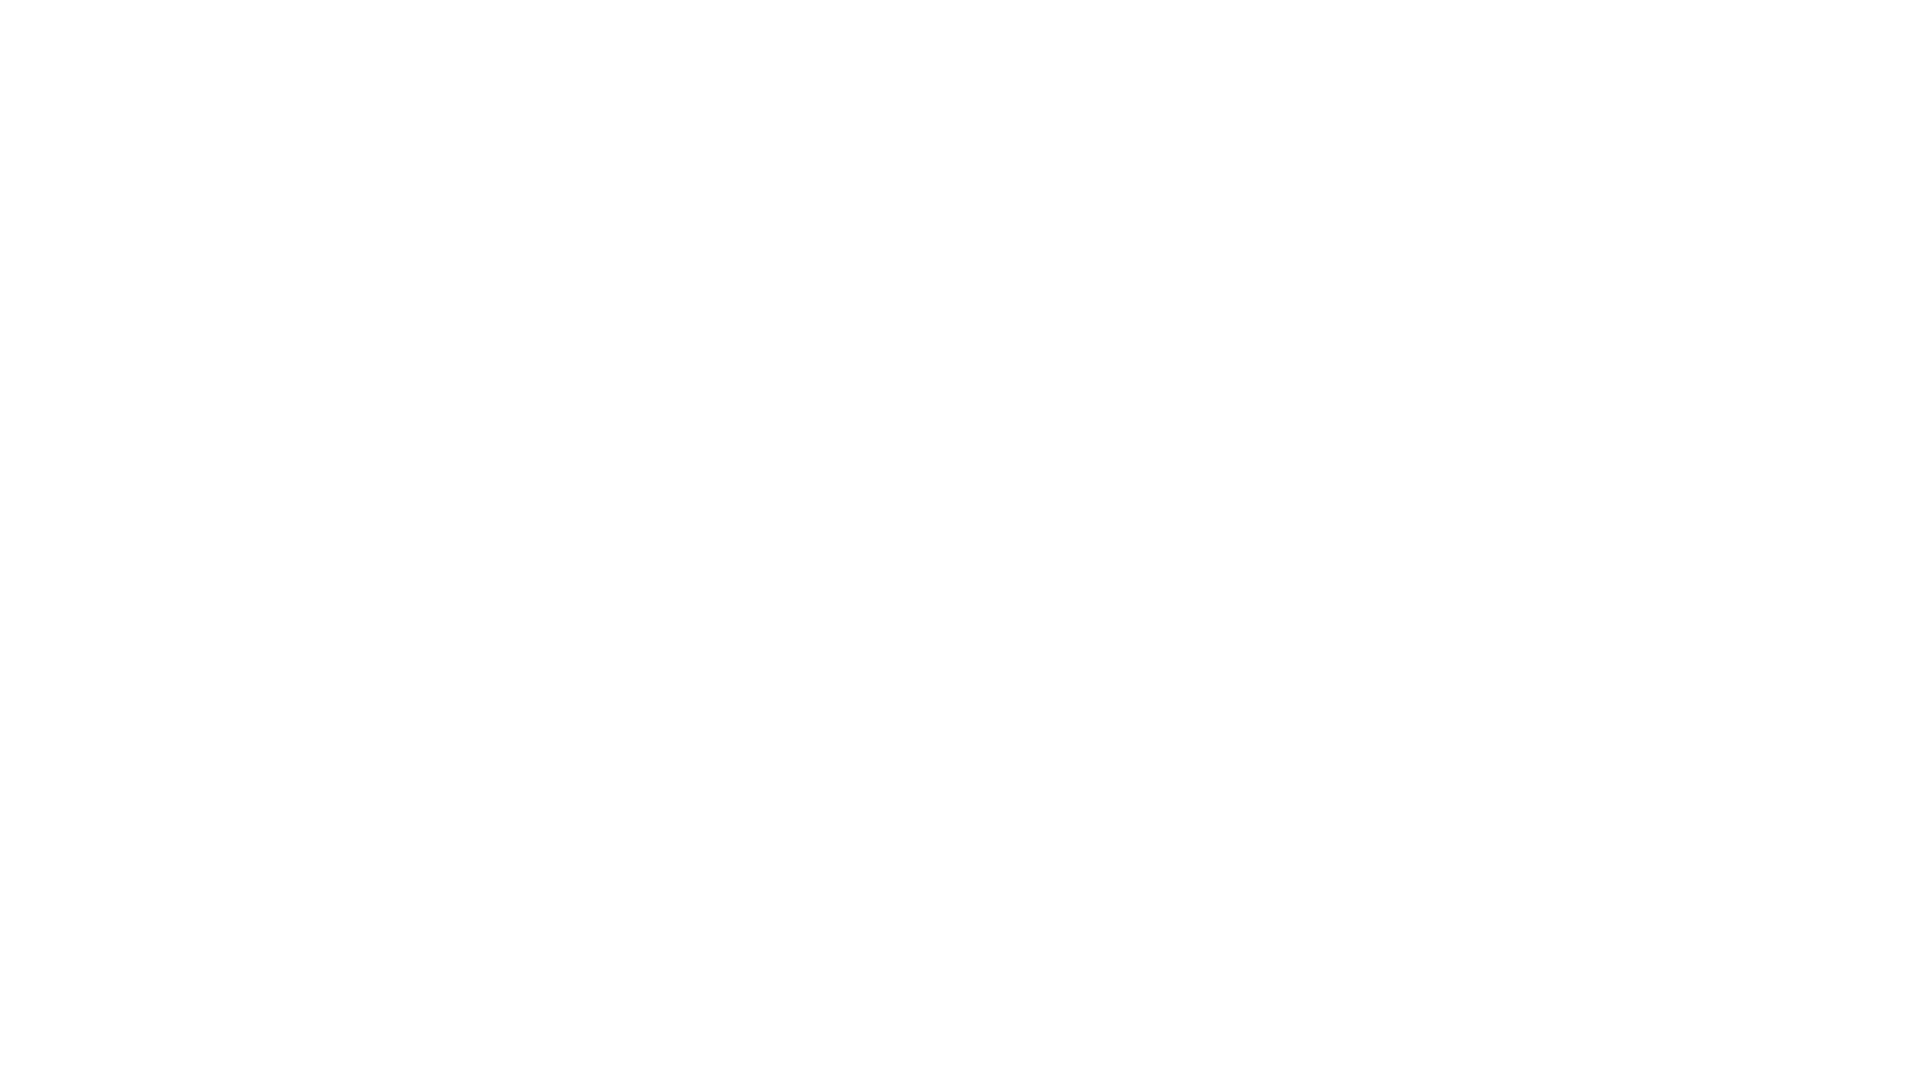 Image of rasterized industry logos